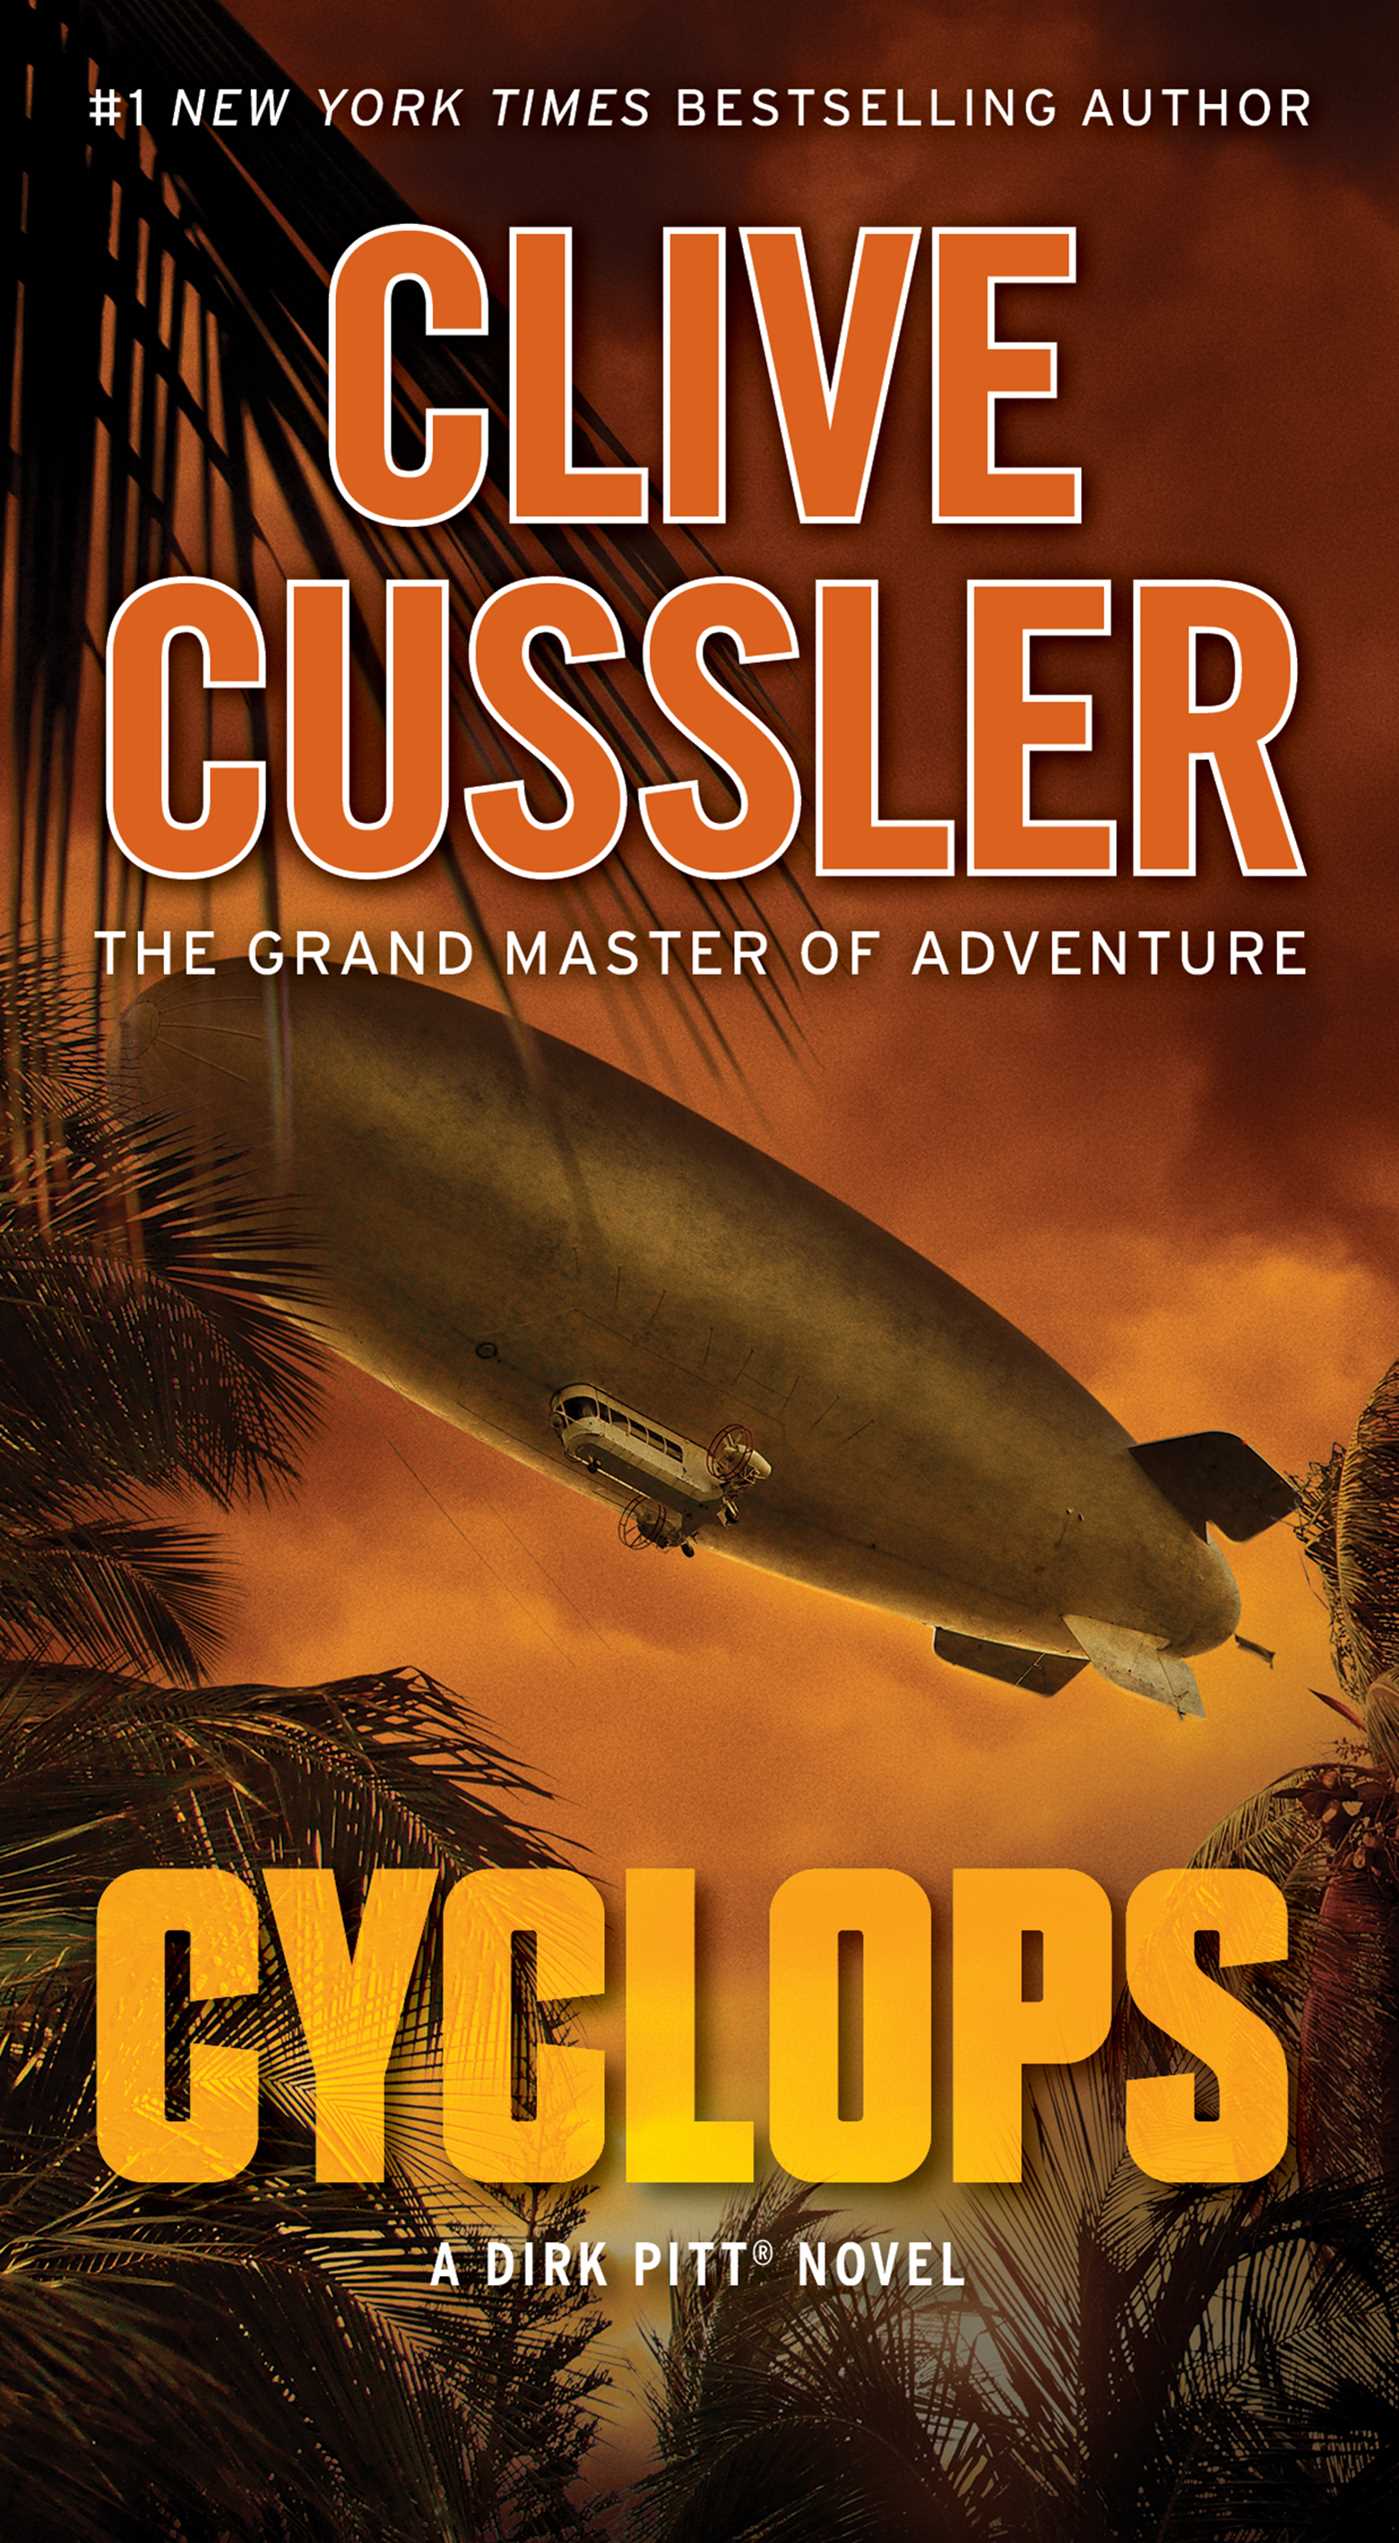 Cyclops (Paperback) - image 2 of 3